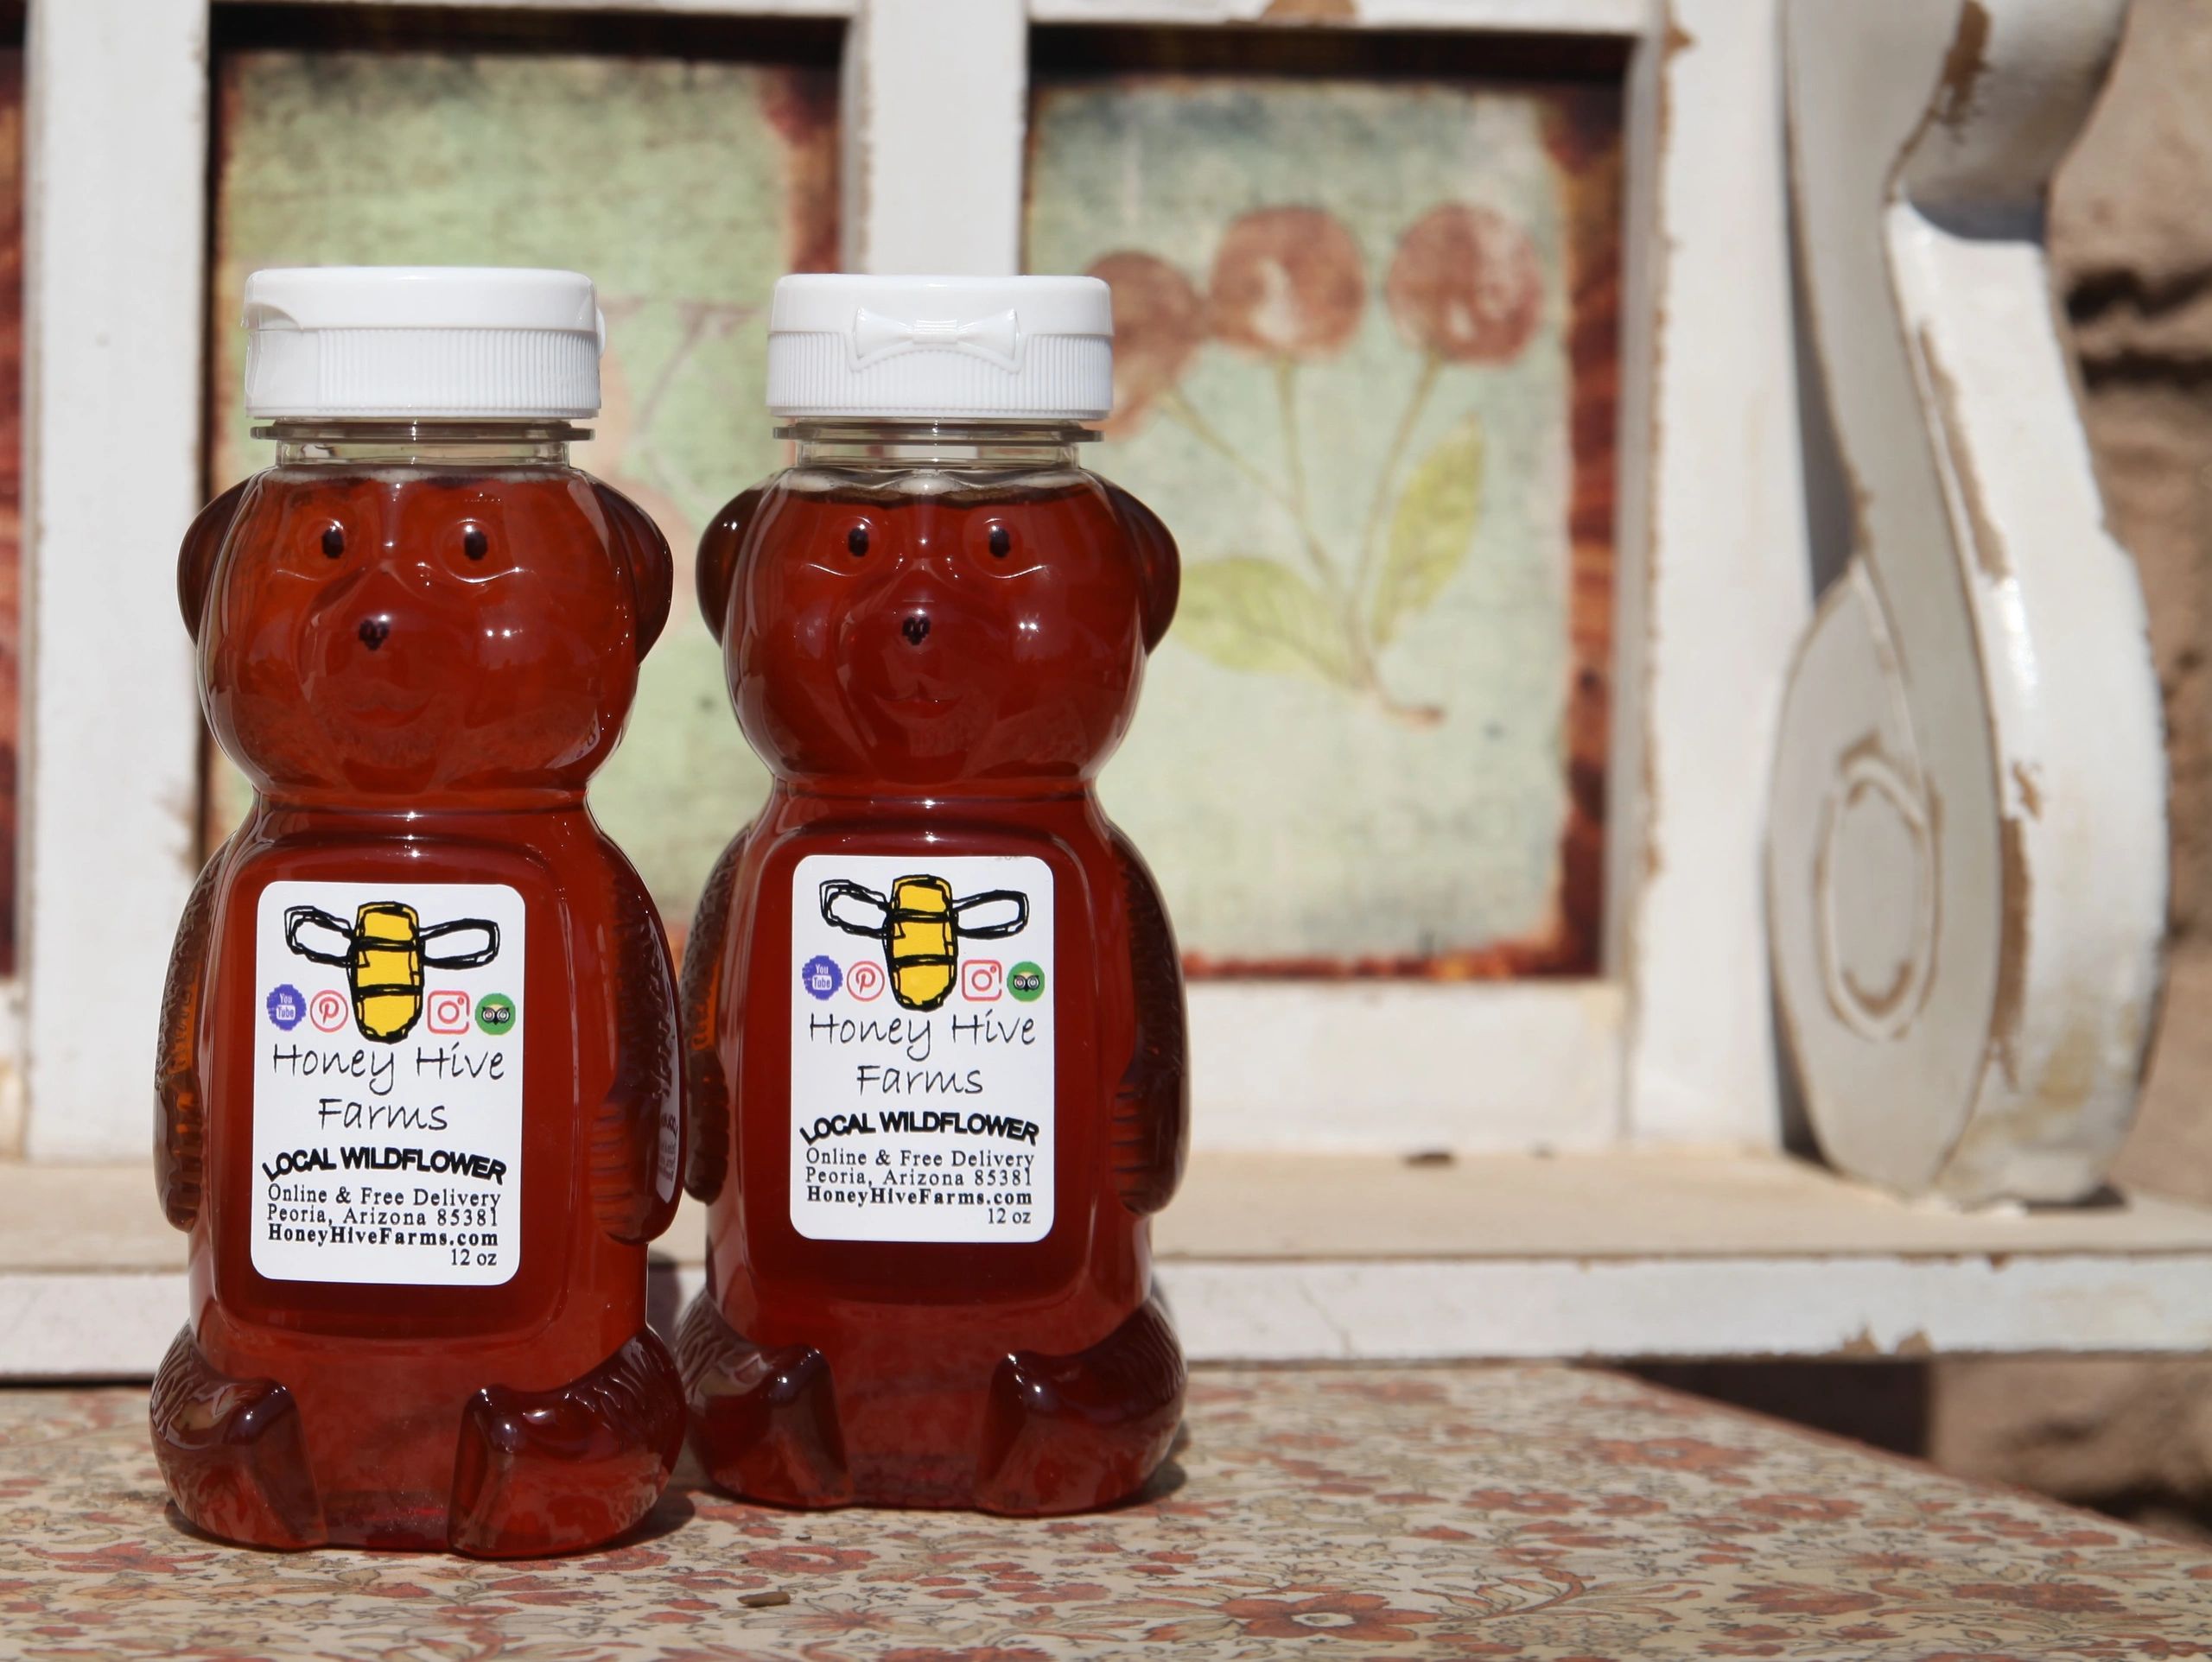 Wildflower honey to Desert Ridge. Desert Ridge honey is raw and local to the area. Free delivery too